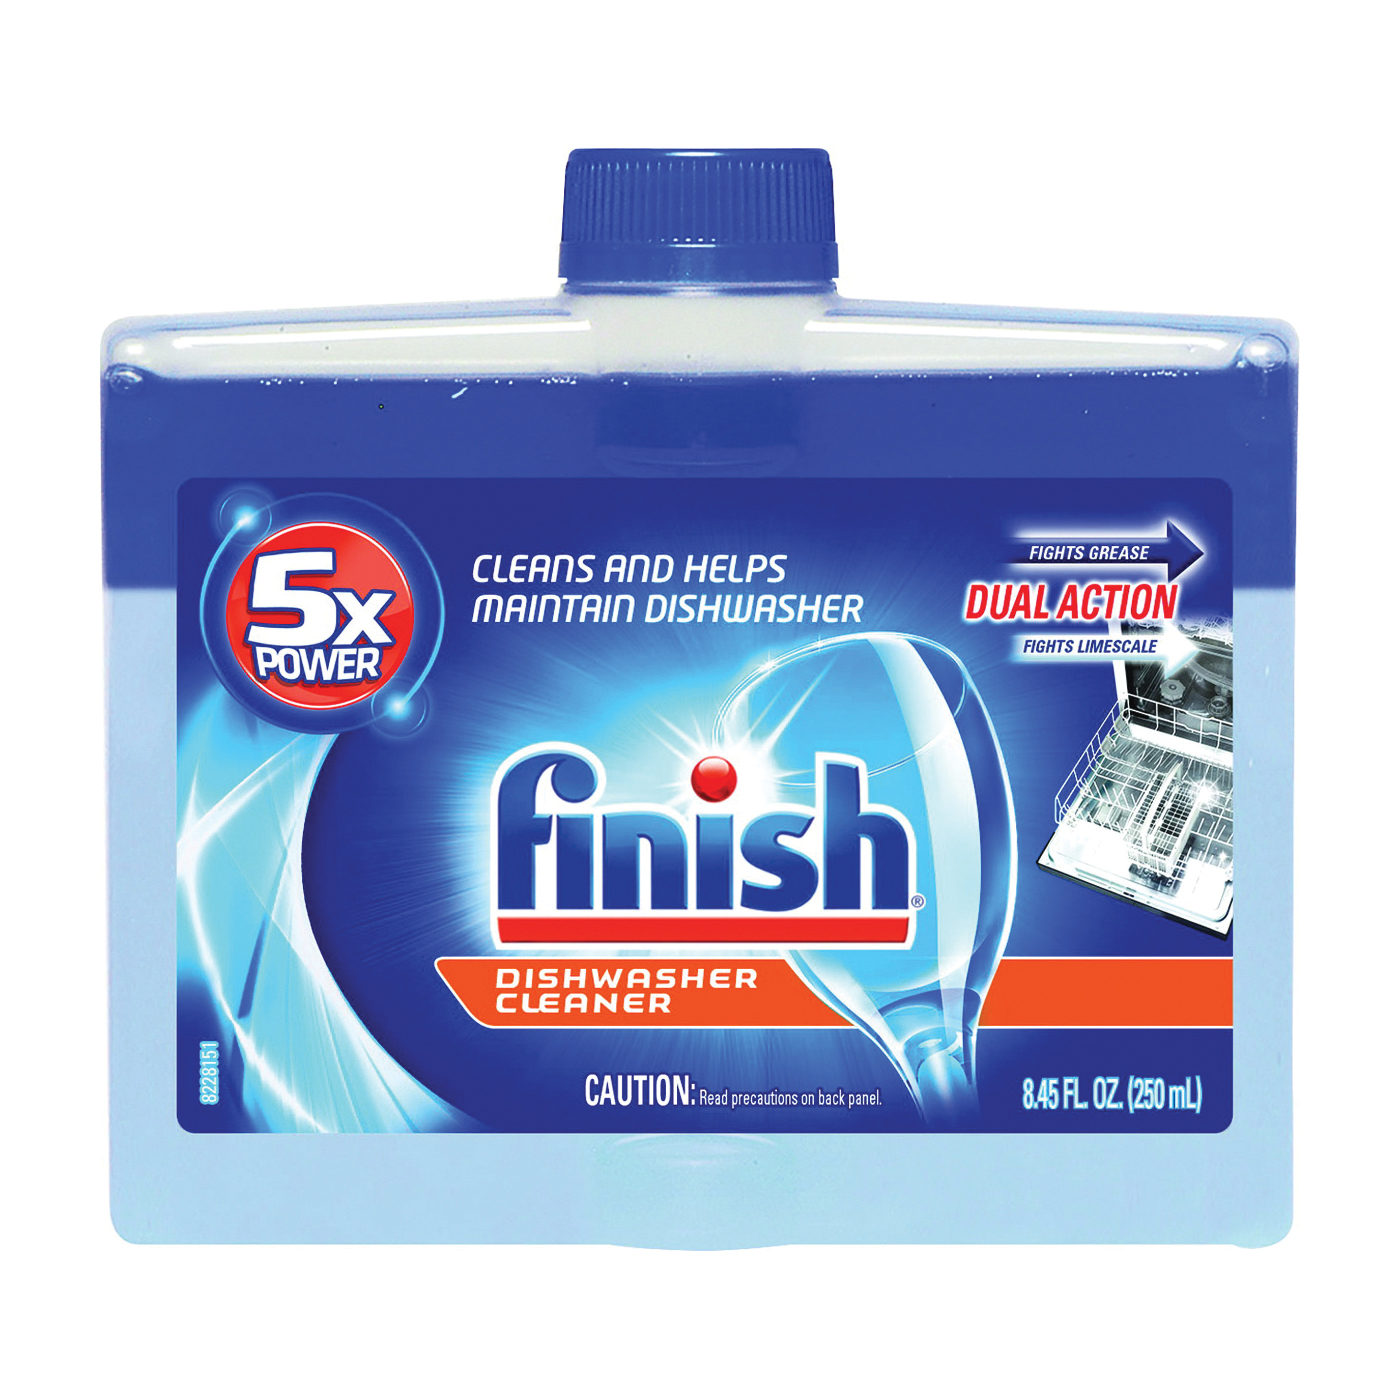 95315 Dishwasher Cleaner, 8.45 oz Bottle, Liquid, Perfumed